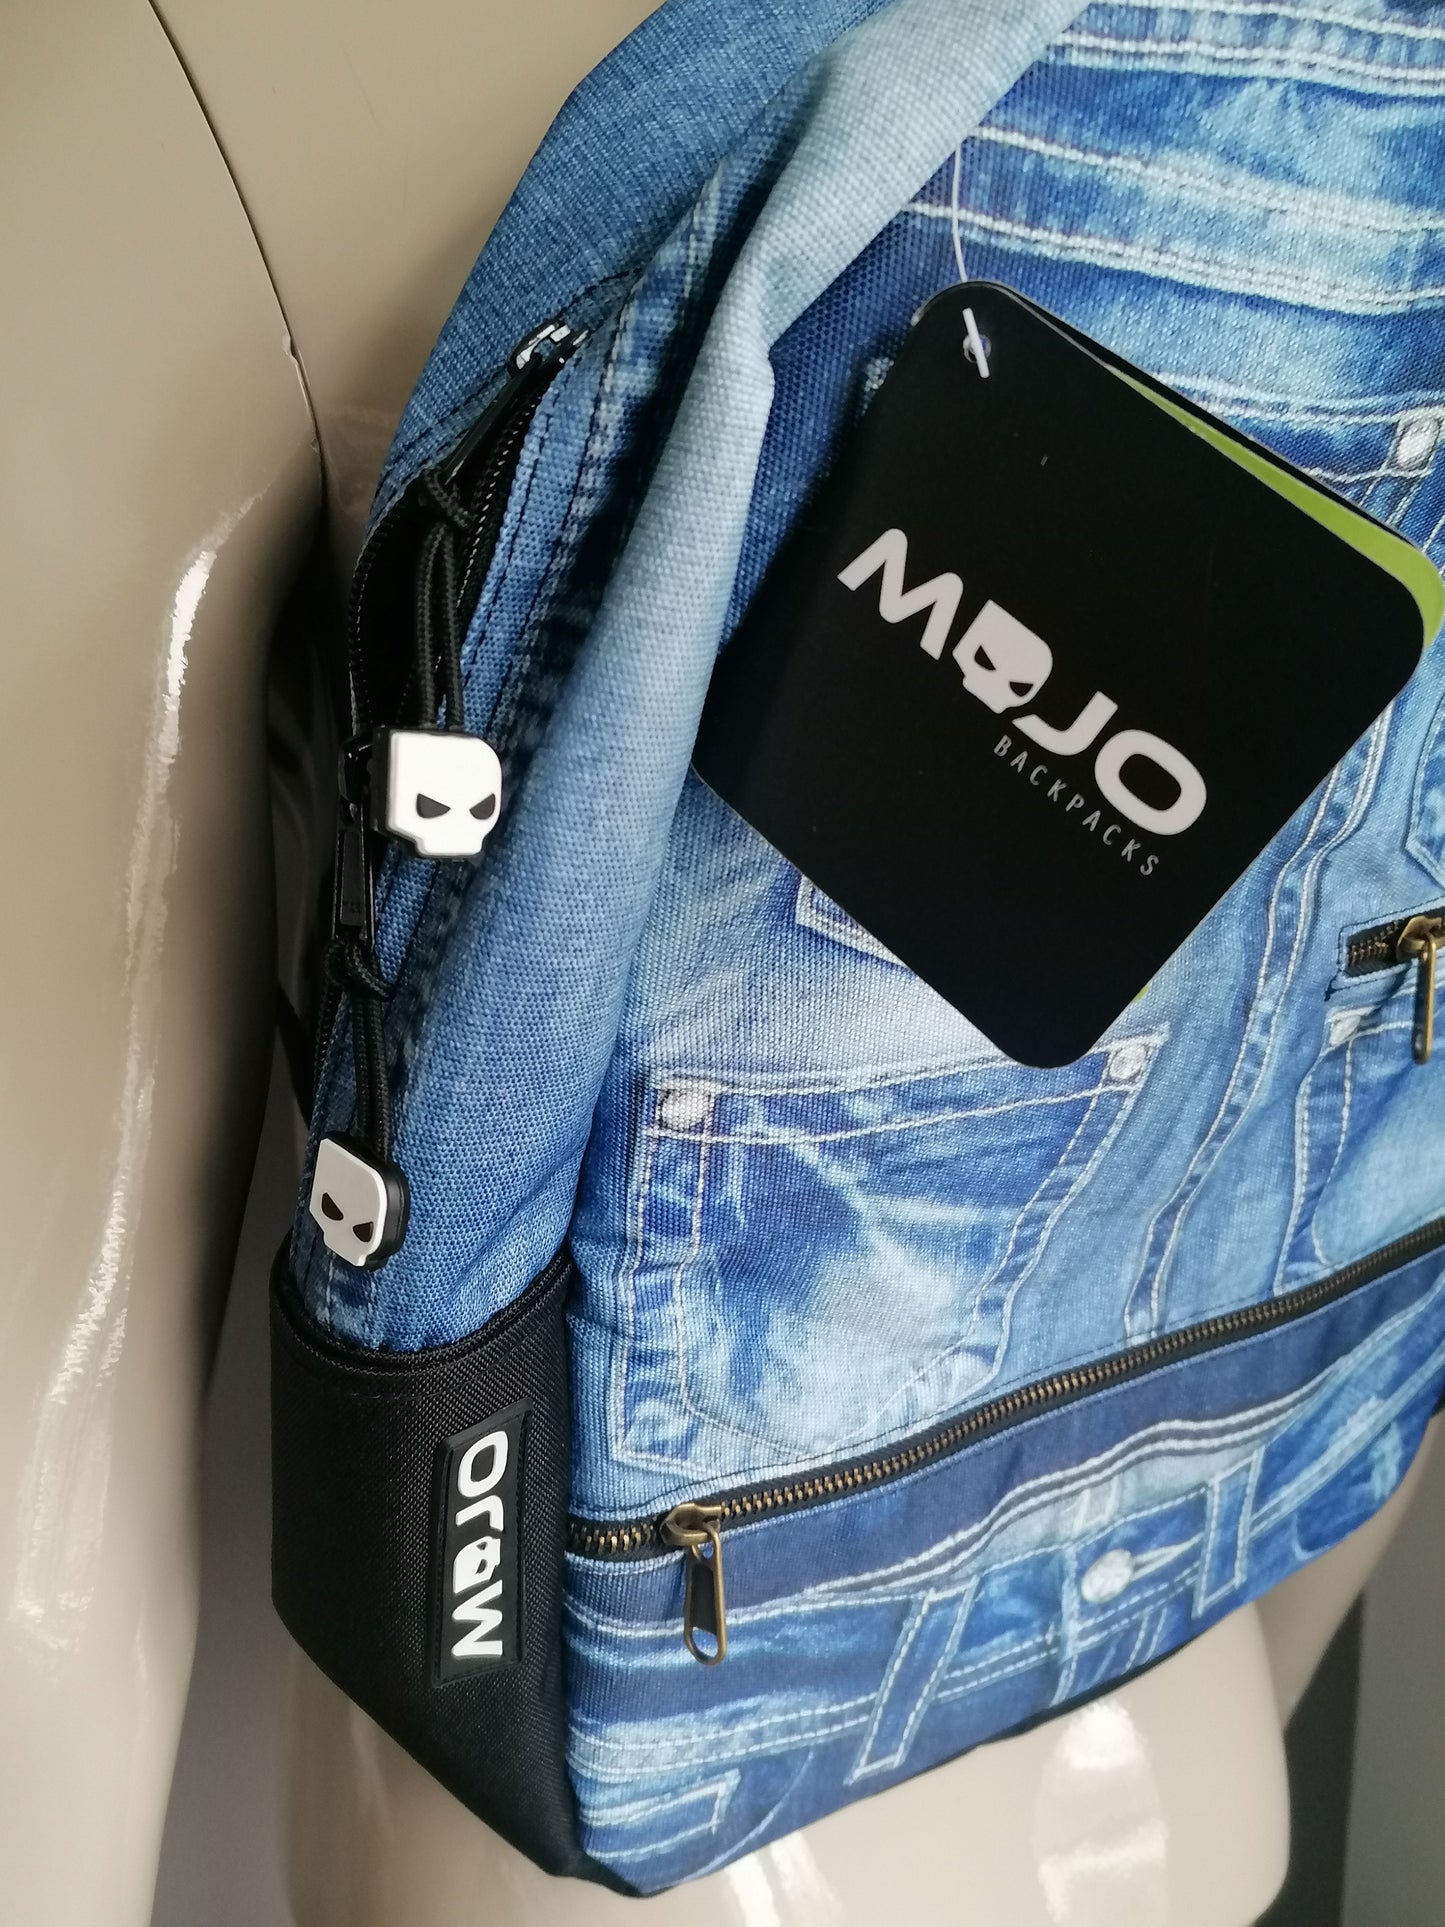 Mojo backpacks backpack. Blue jeans look print. Some inside pocket.